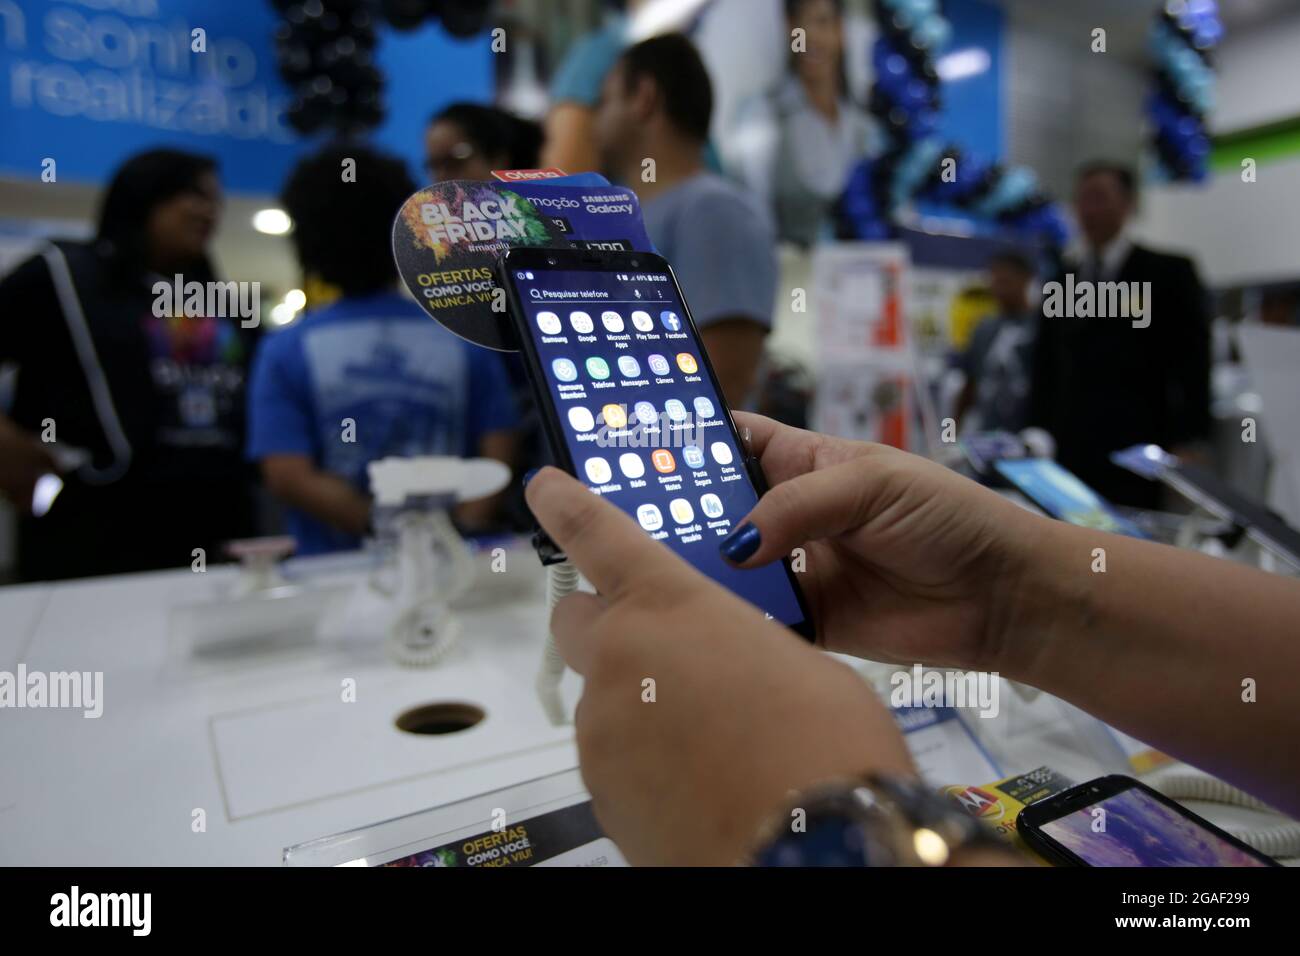 salvador, bahia, brasile - 23 novembre 2018: Cliente in negozio di vendita smartphone durante Perido de Balck Venerdì a Salvador città. Foto Stock